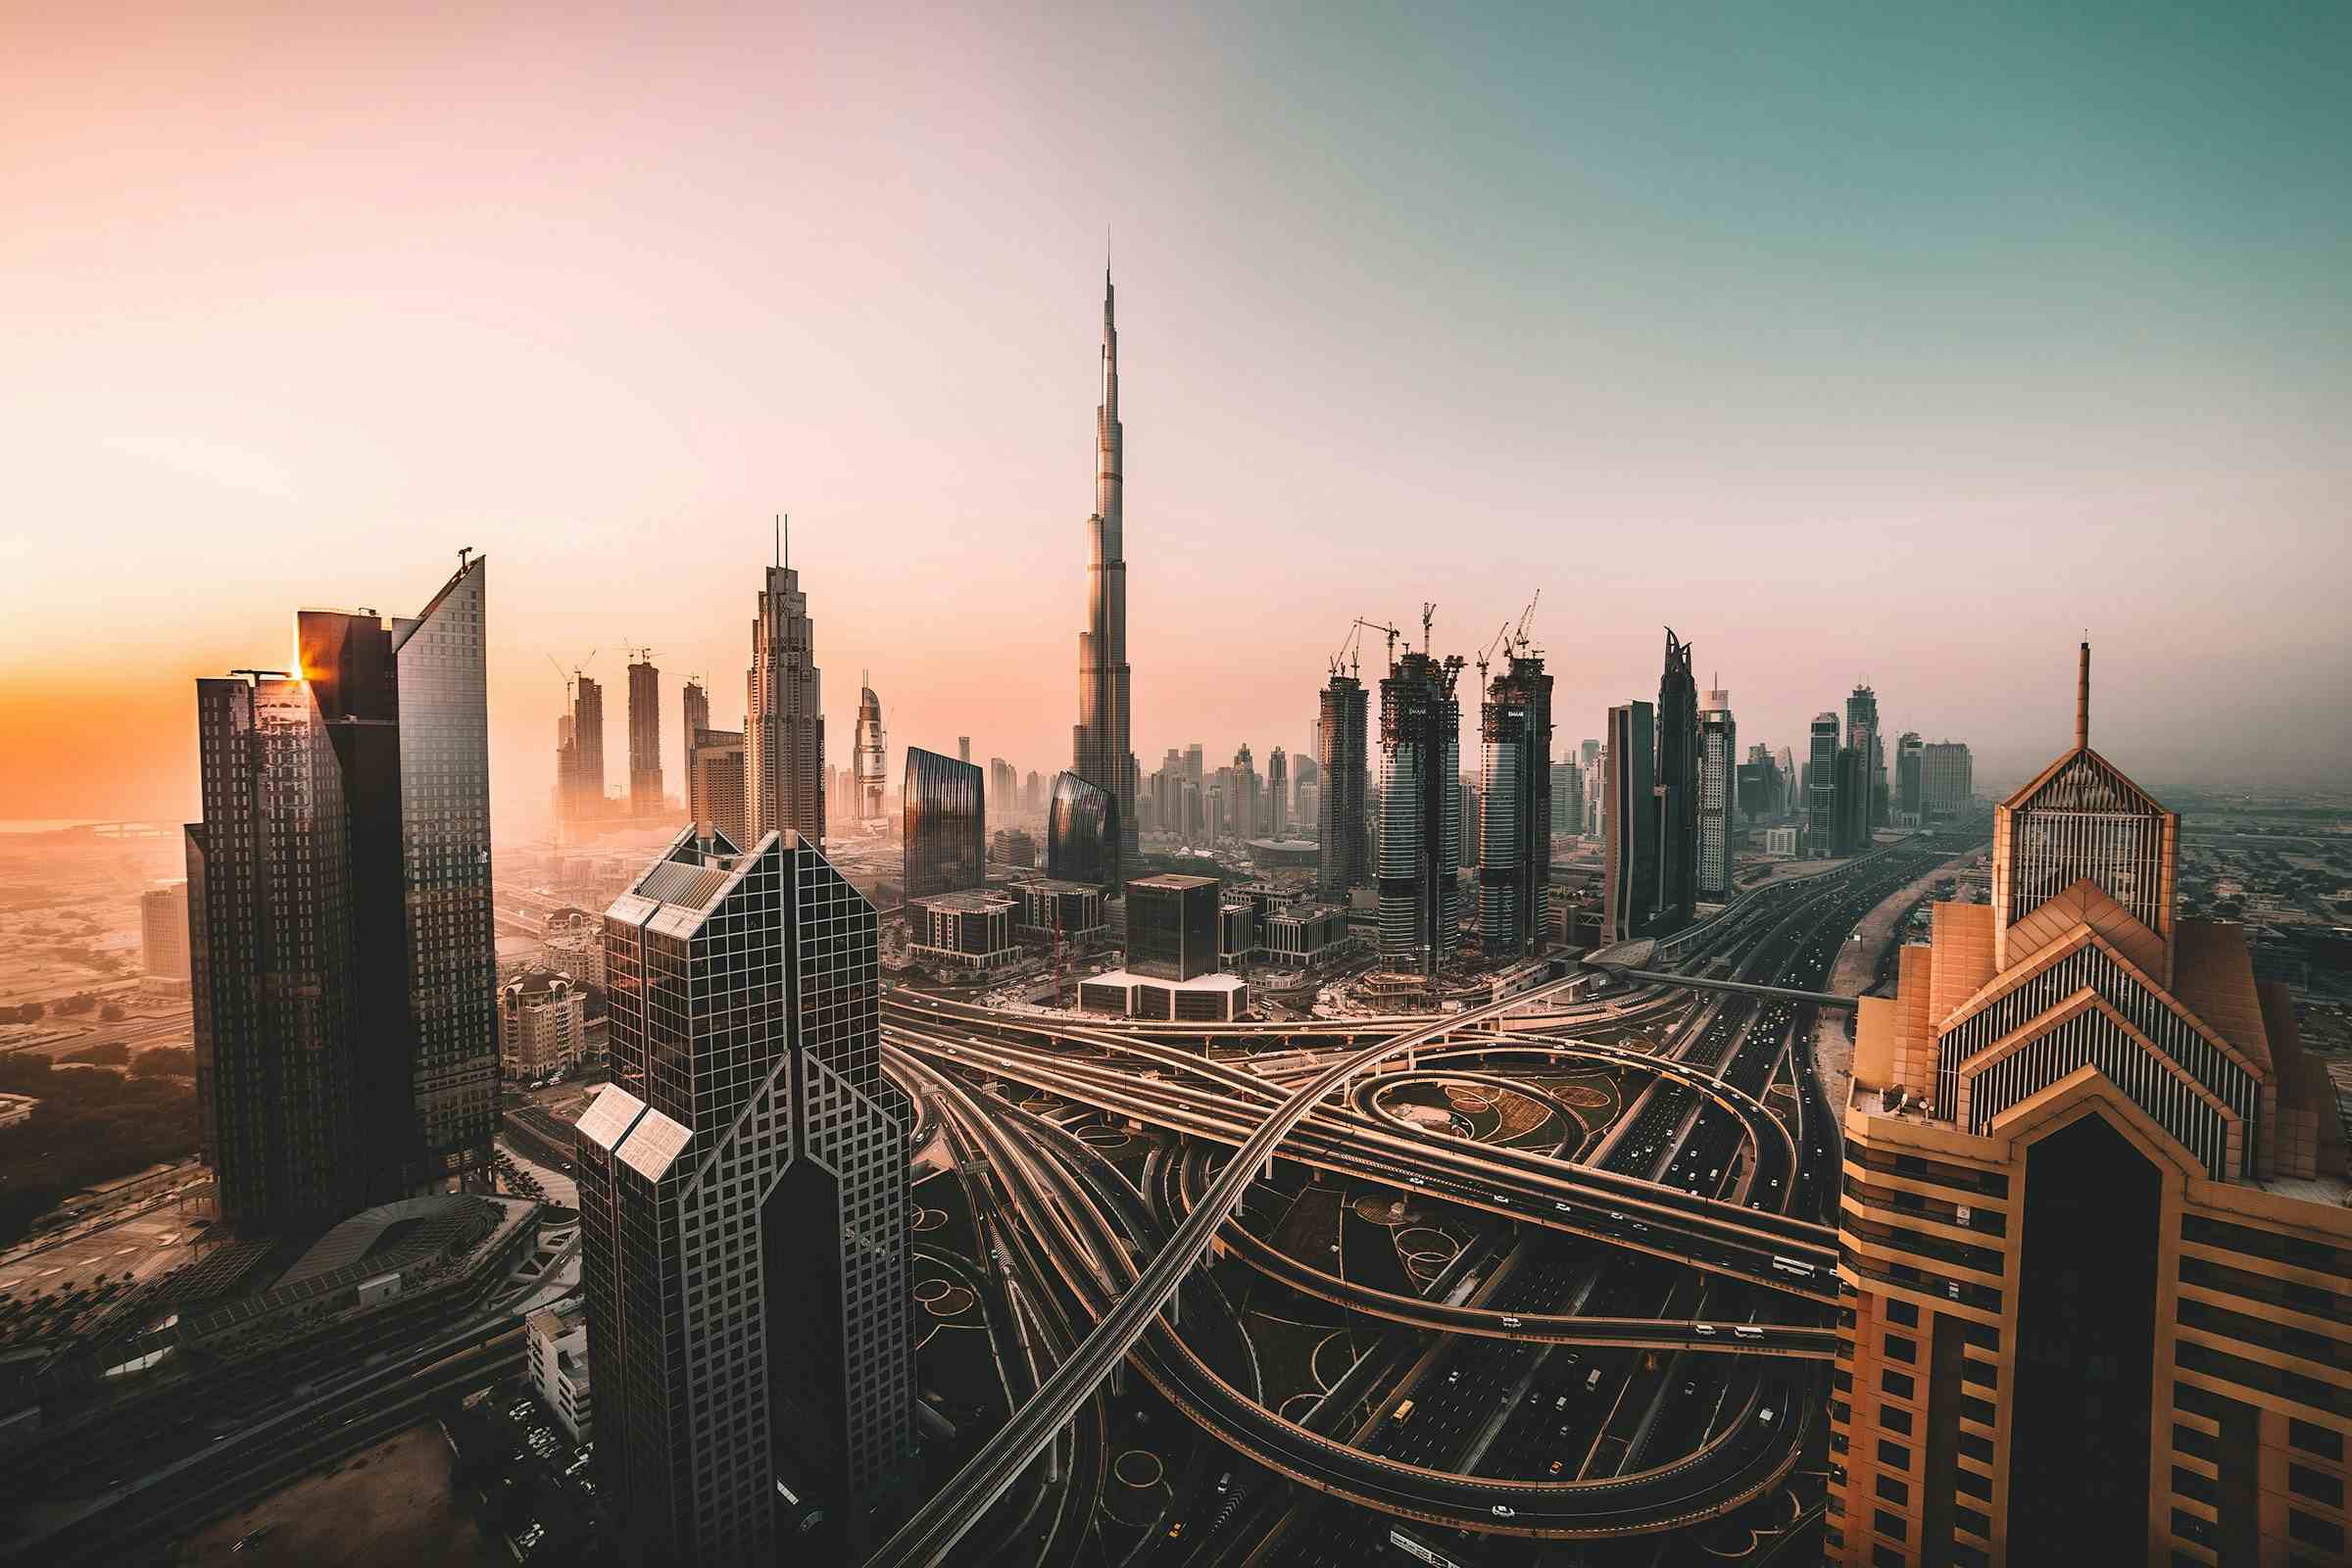 Photo of Dubai by David Rodrigo on Unsplash